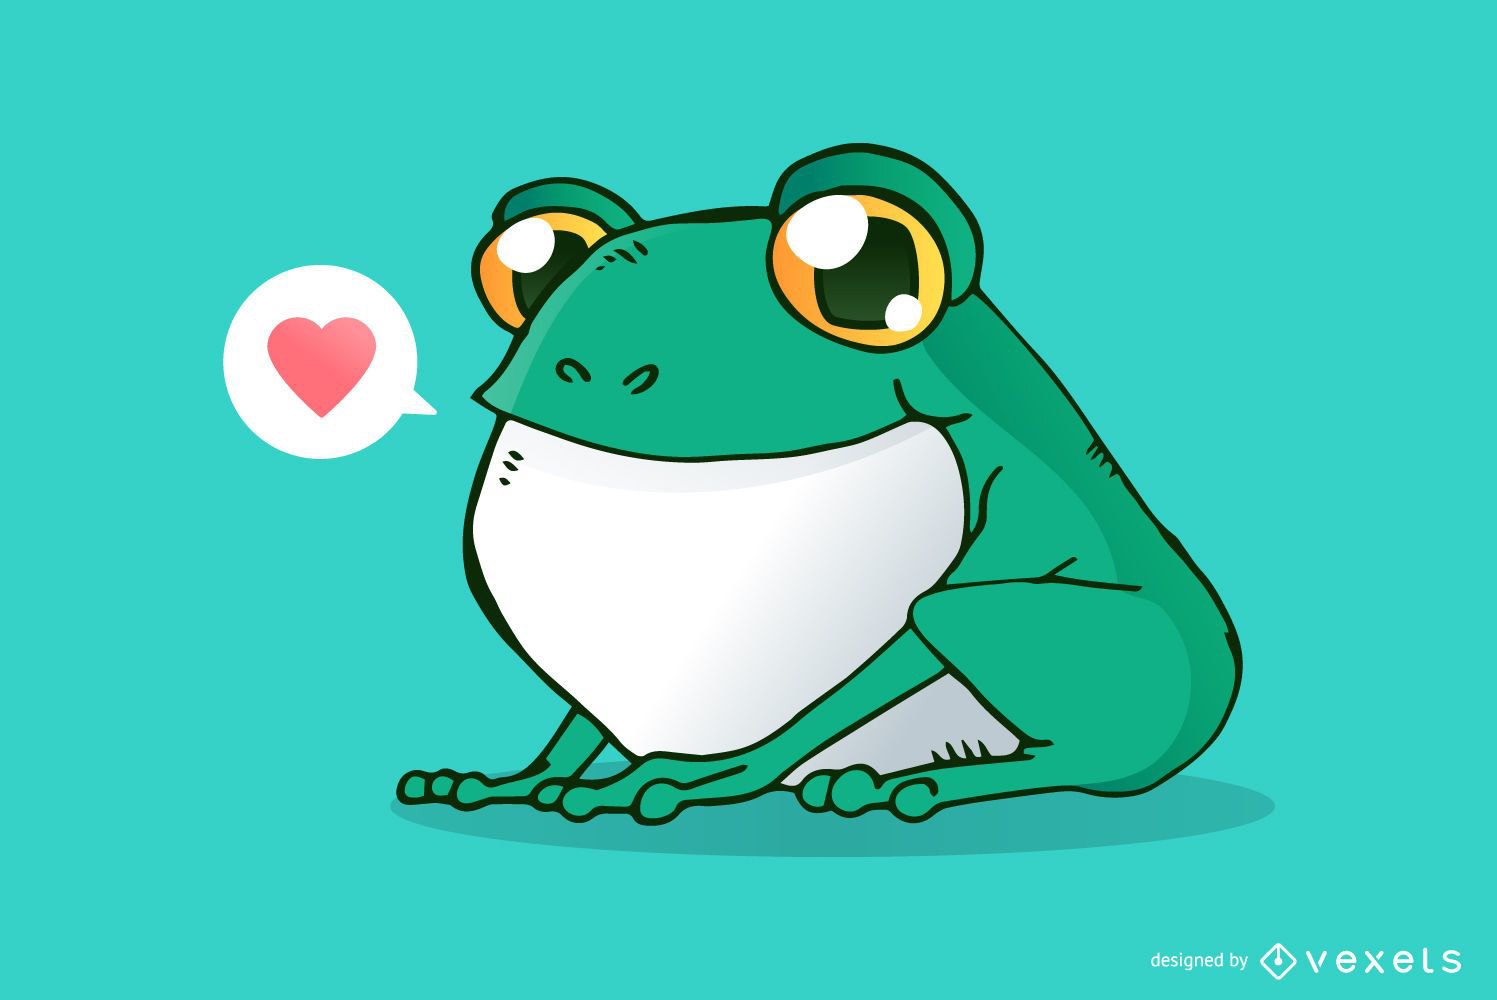 Cute frog cartoon illustration